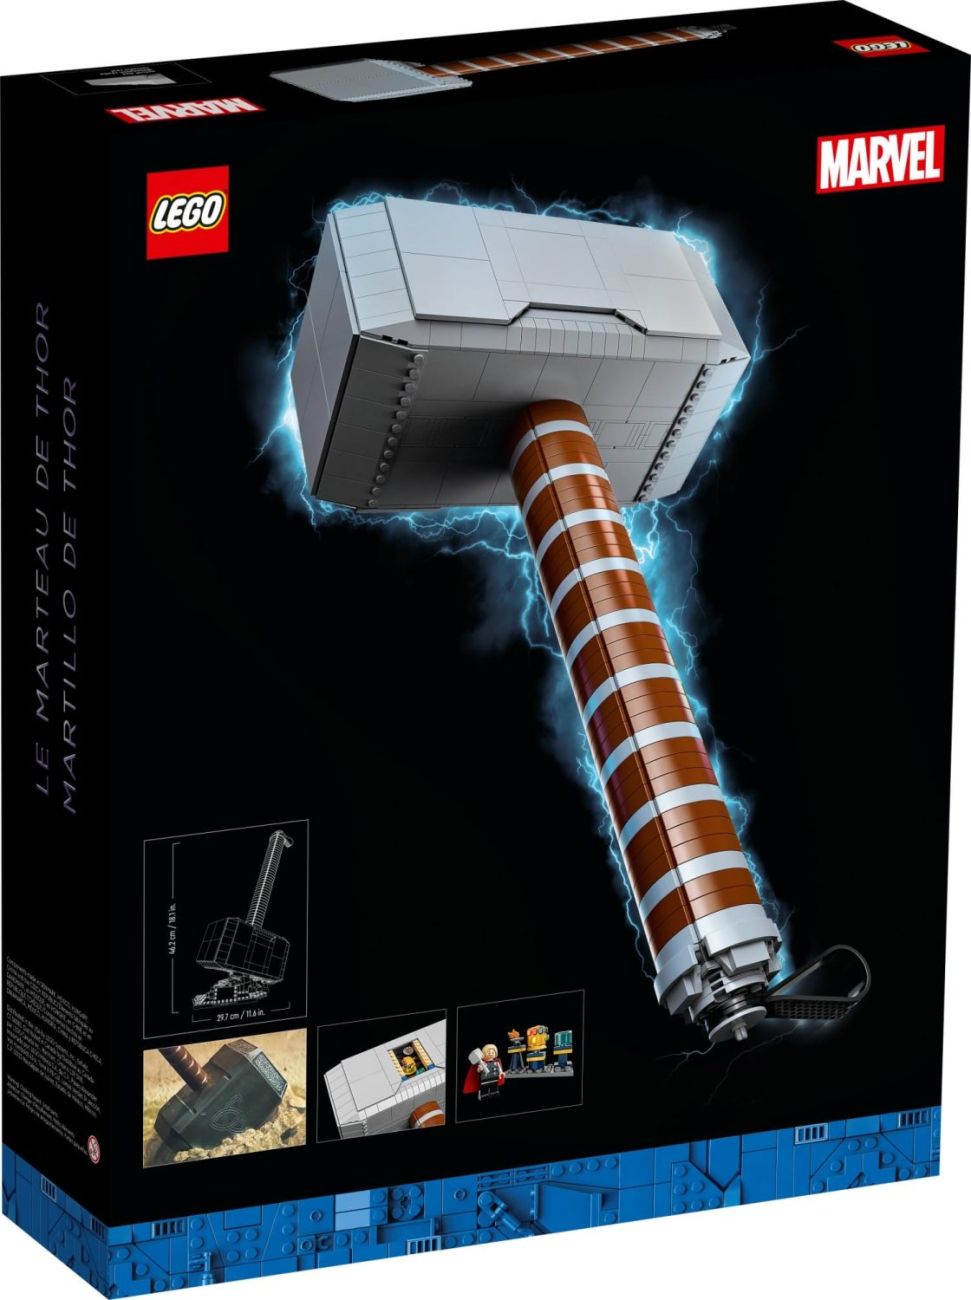 LEGO 76209 Thors Hammer offiziell vorgestellt